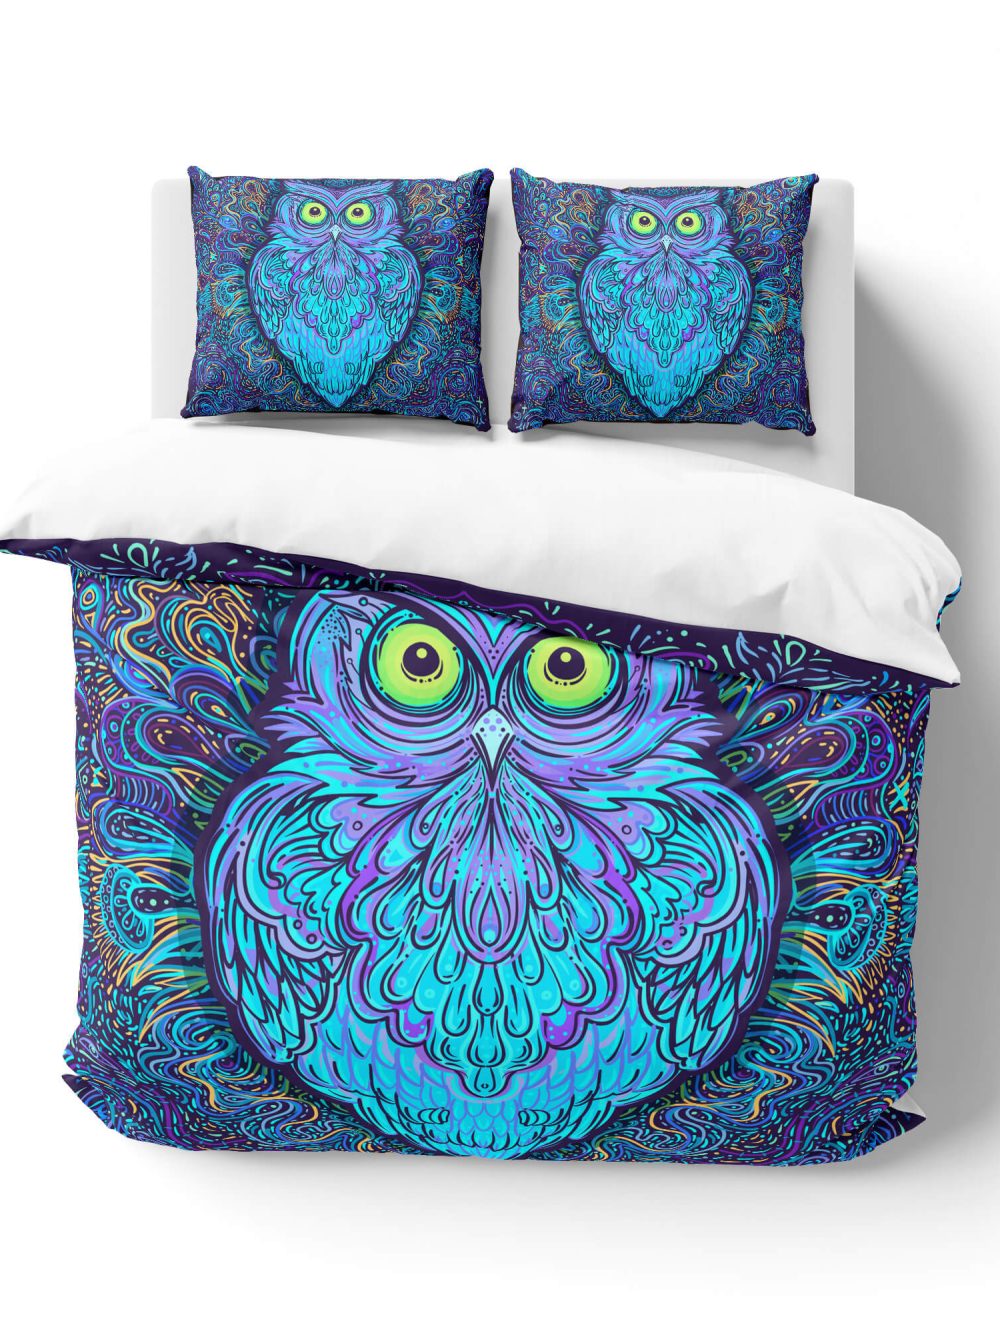 Interdimensional Owl Bedding Set